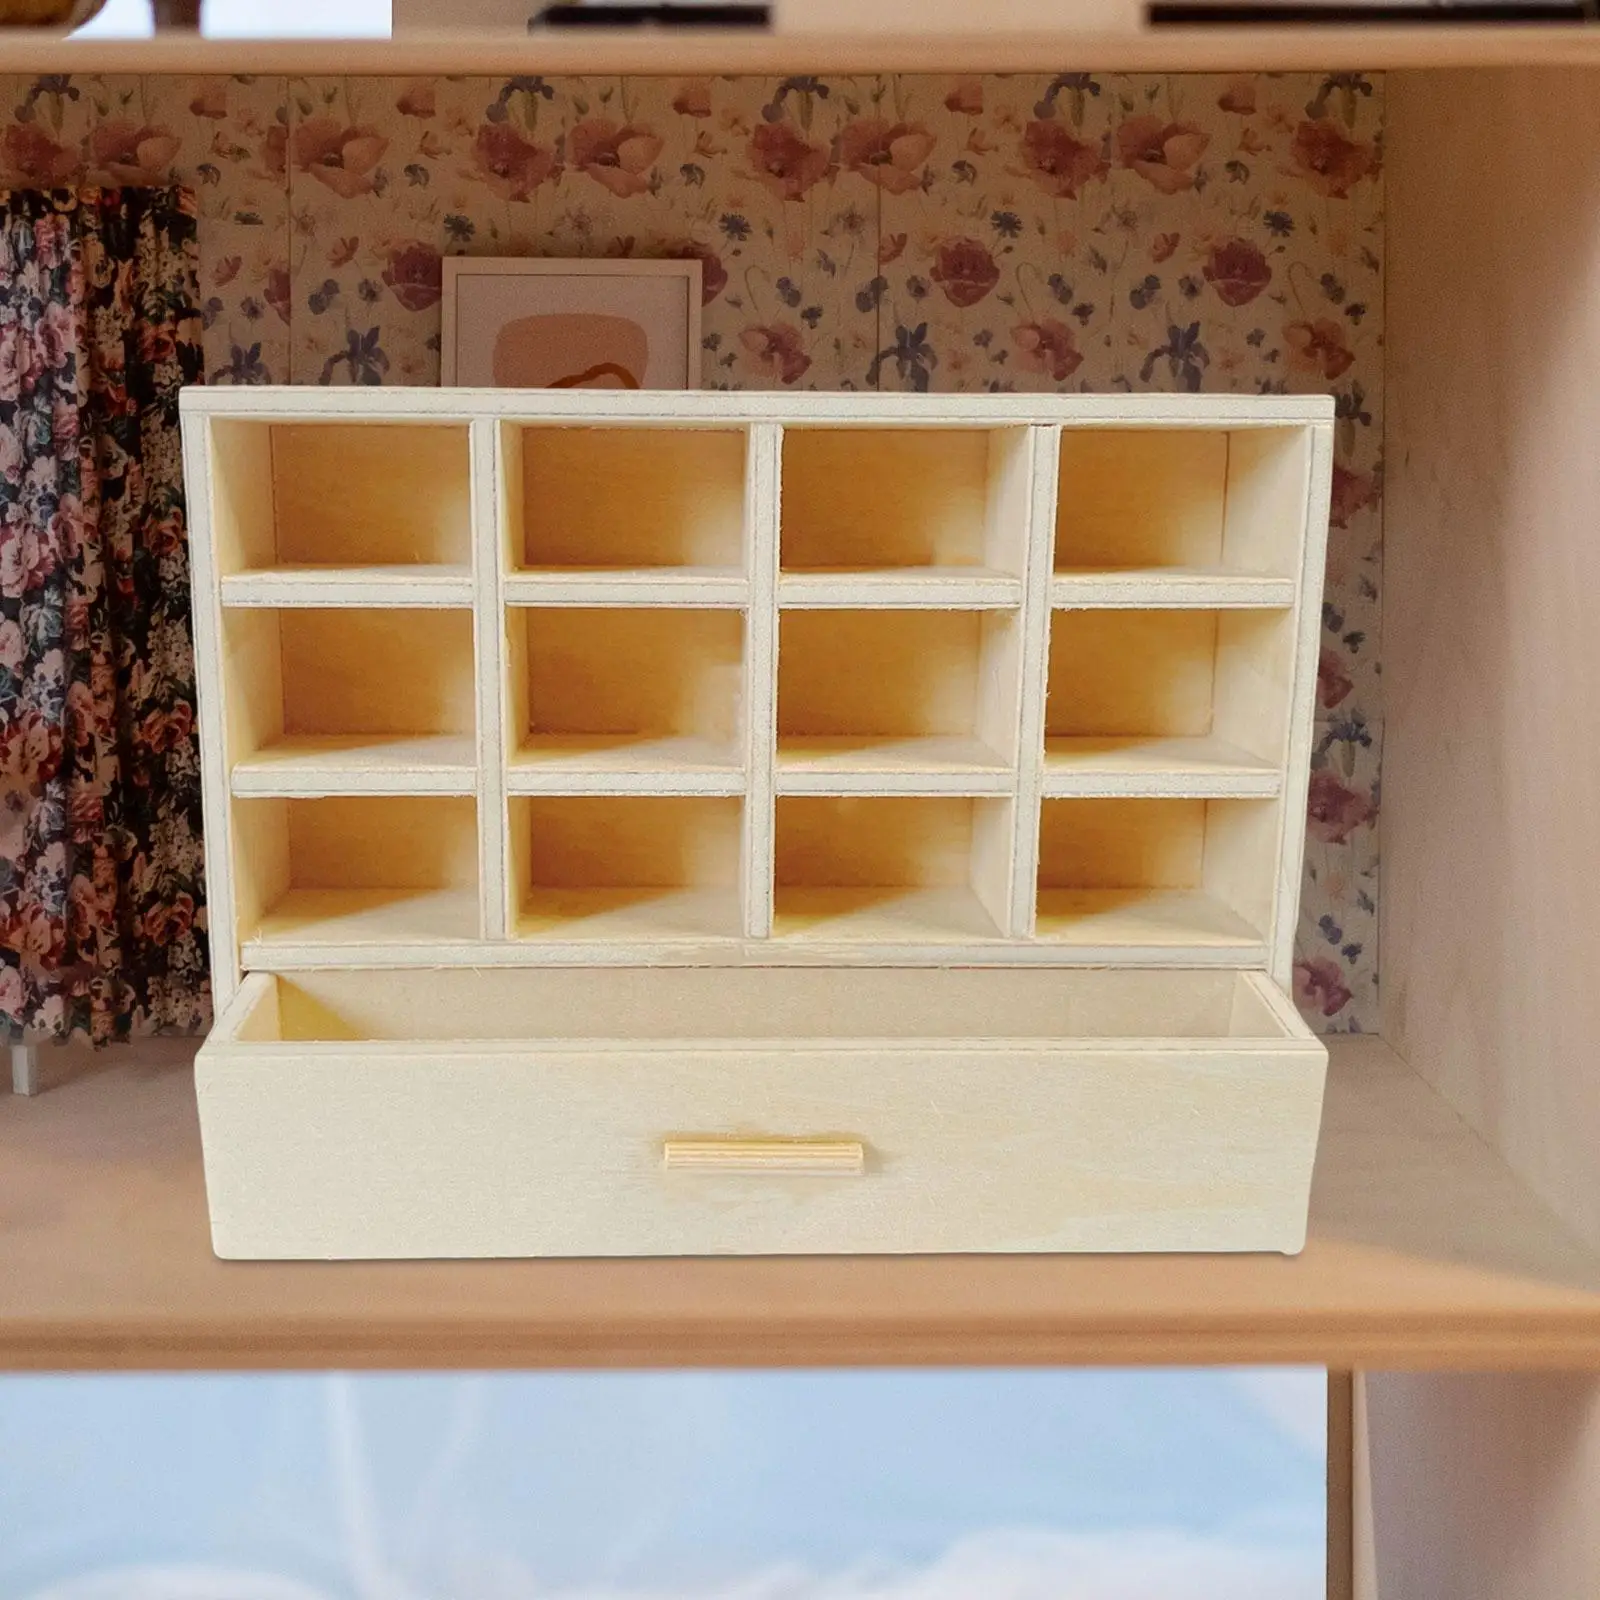 1/12 Dollhouse Miniature Model Bookshelf Scenery Supplies Accessories Home Furniture Toys Bedroom Living Room Decor